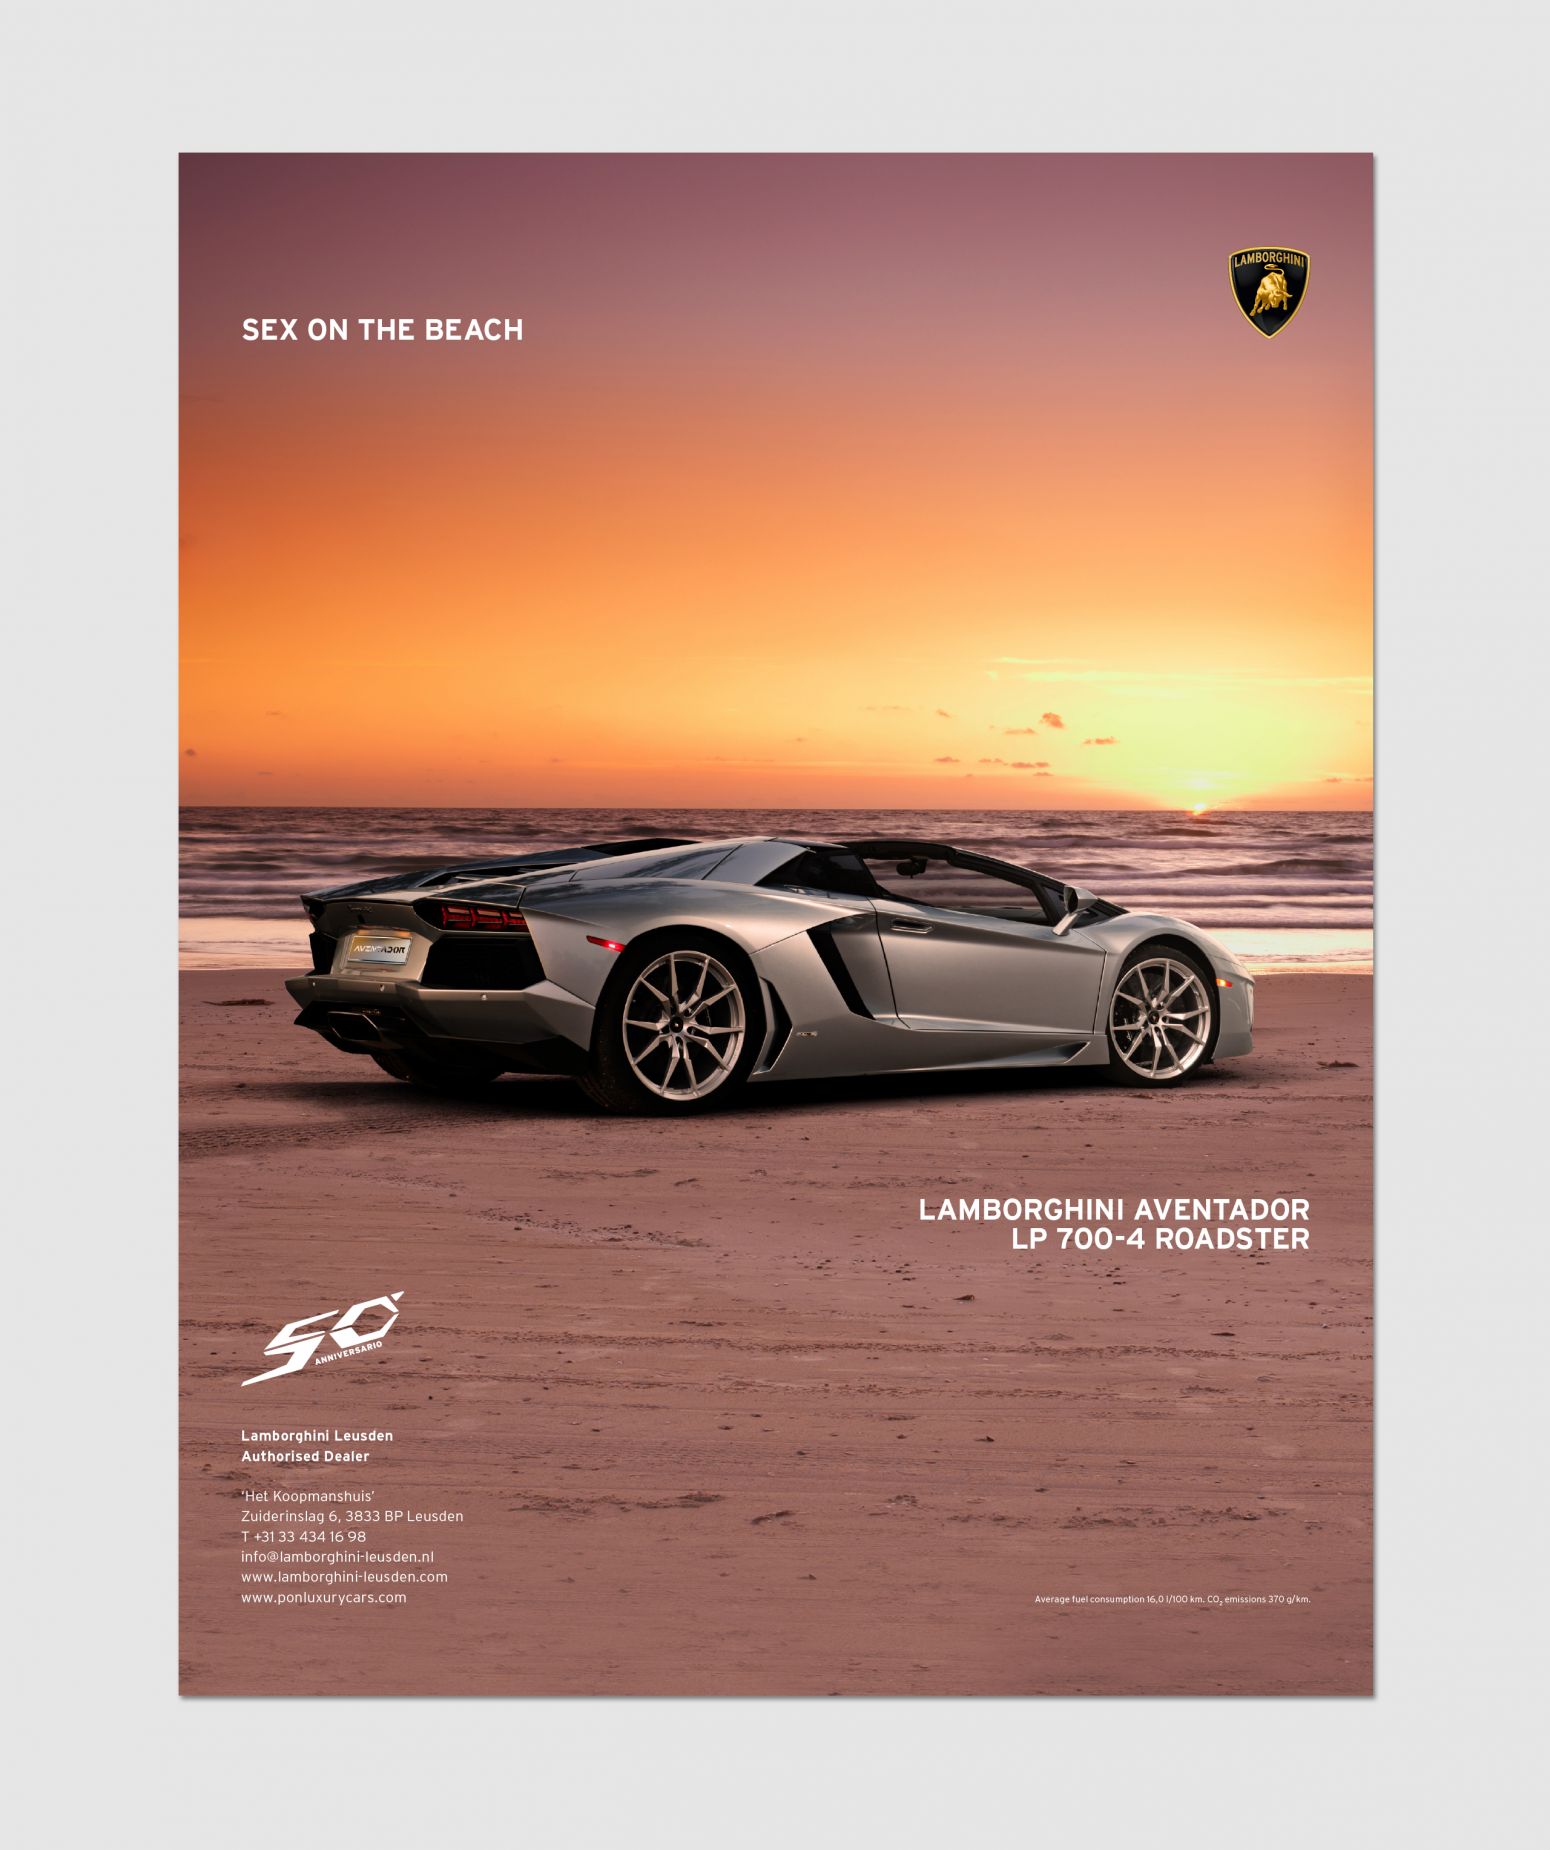 Lamborghini ‘Sex on the Beach’ - AGH & Friends